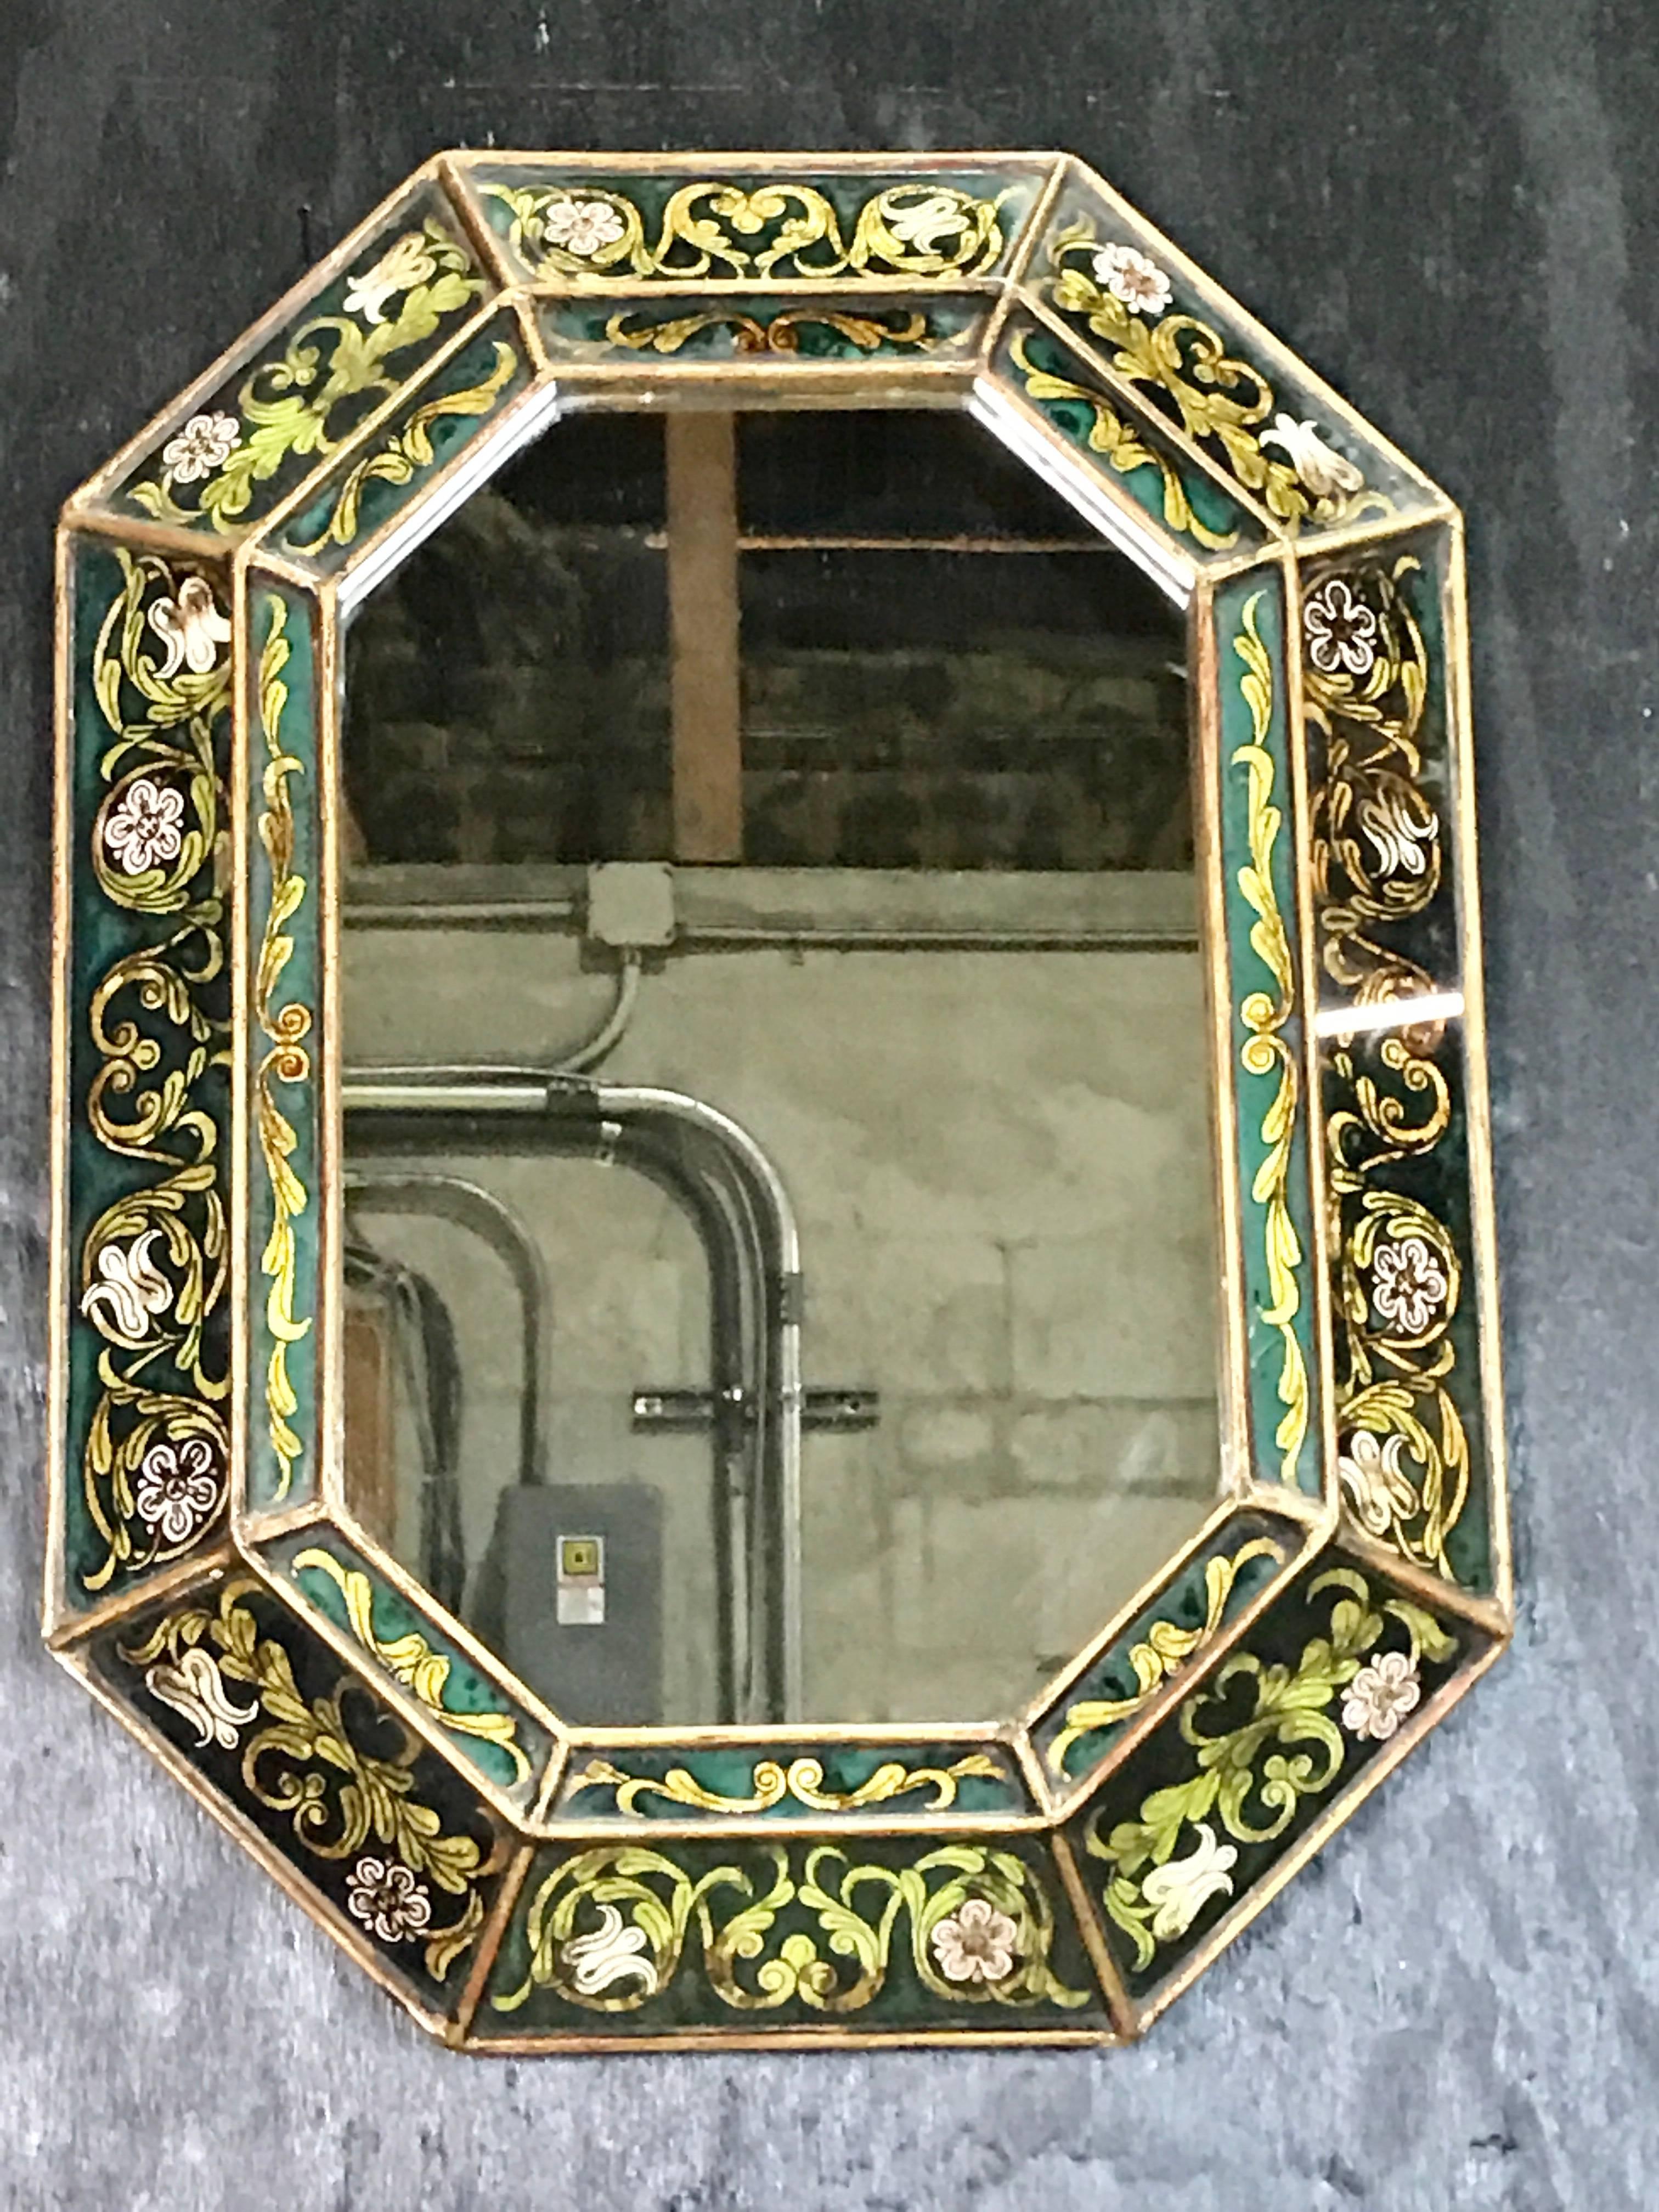 Venetian églomisé mirror, cushioned inset measure: 9.5